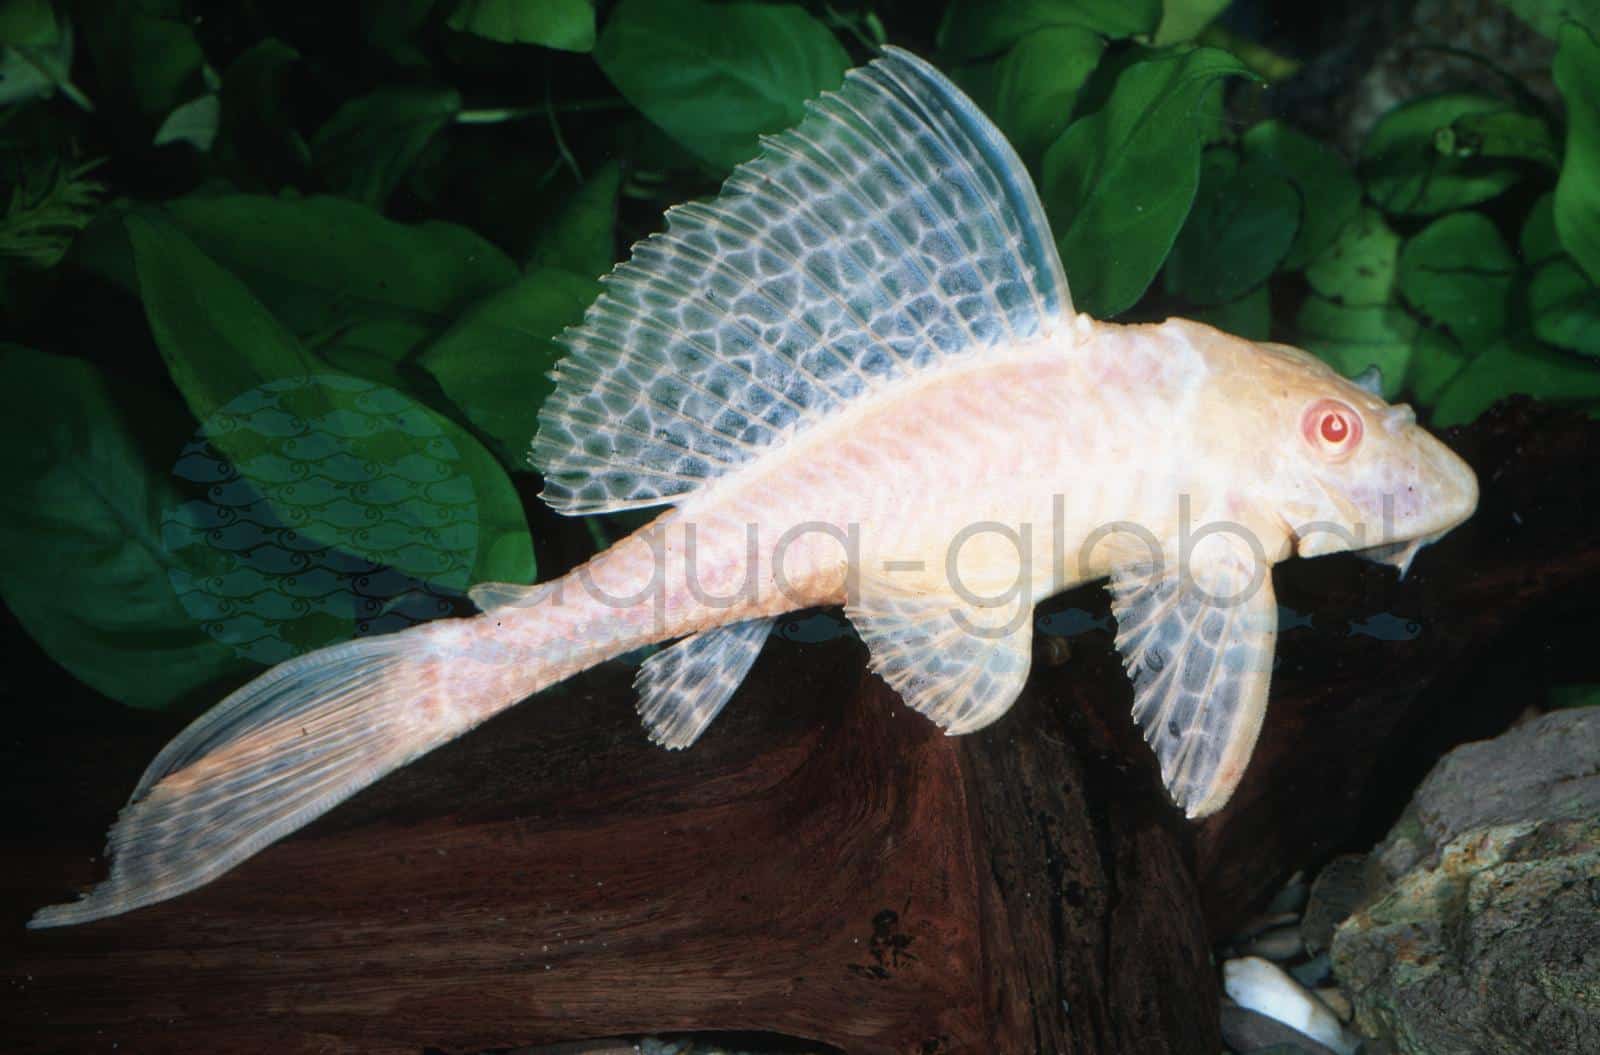 Wabenschilderwels-Albino (Pterygoplichthys gibbiceps "Albino")